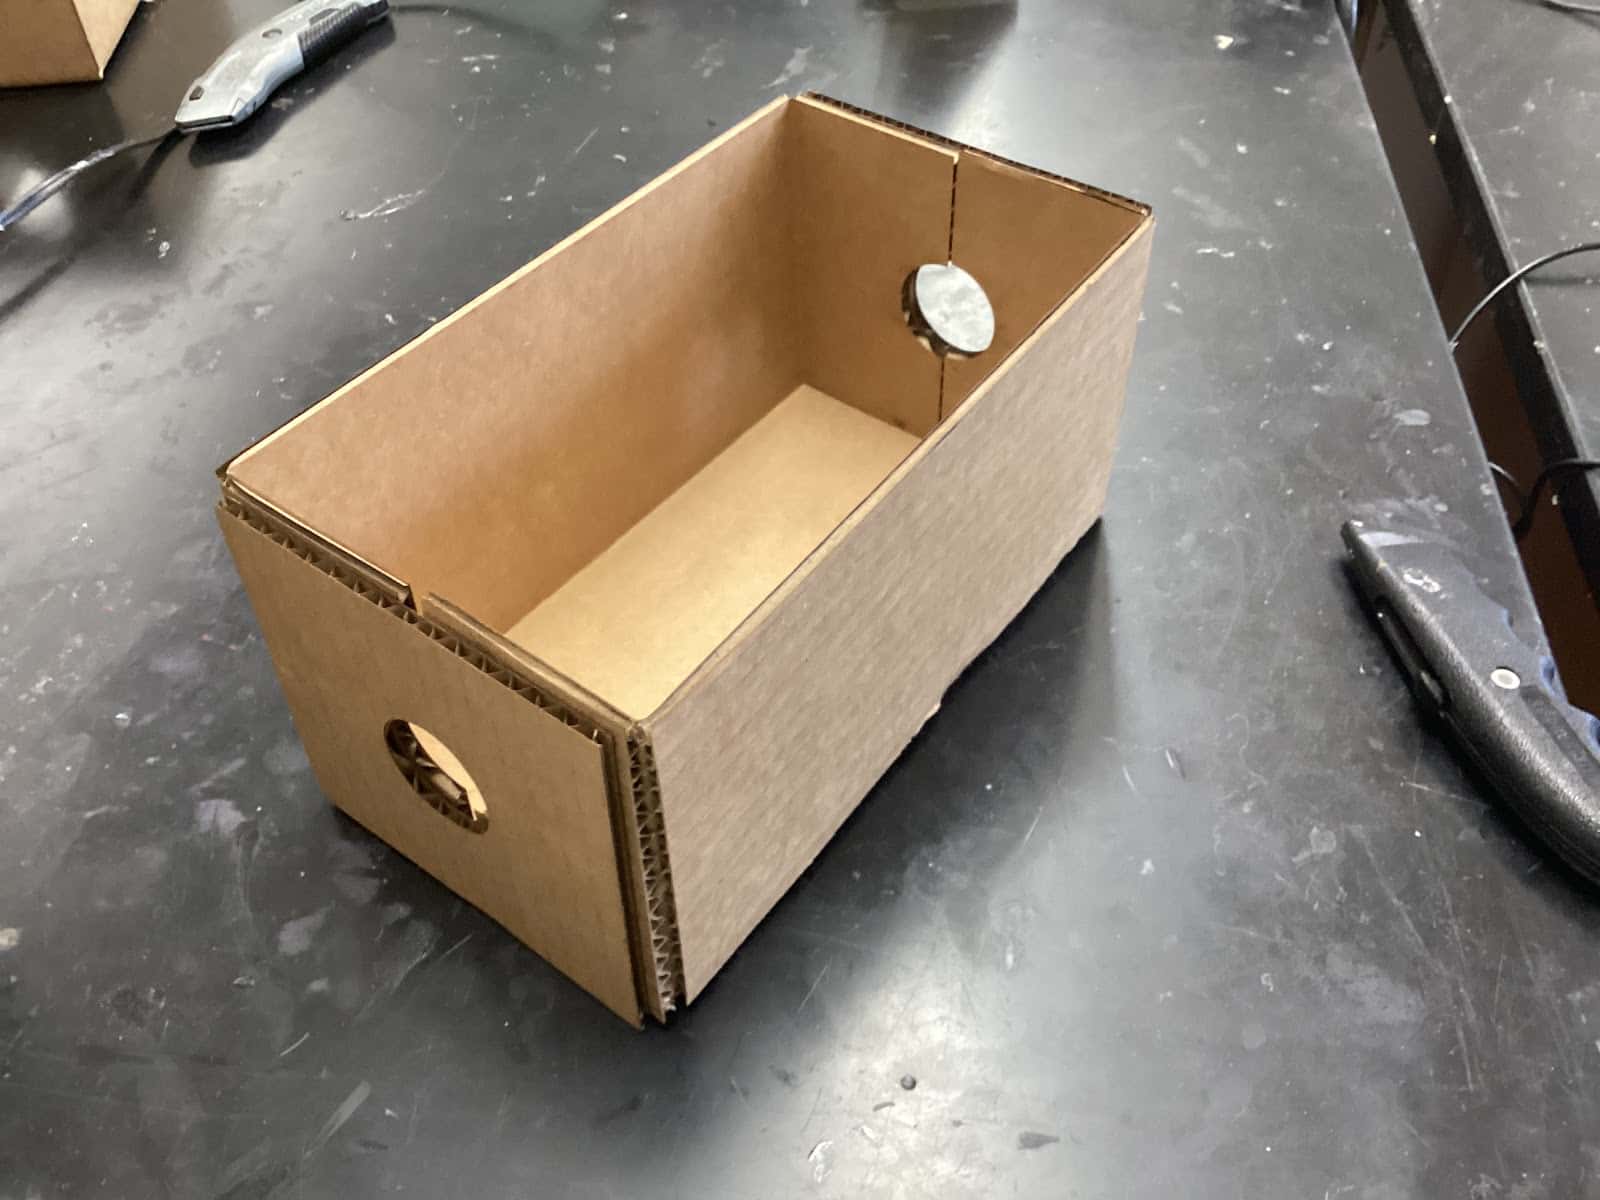 Glued Box